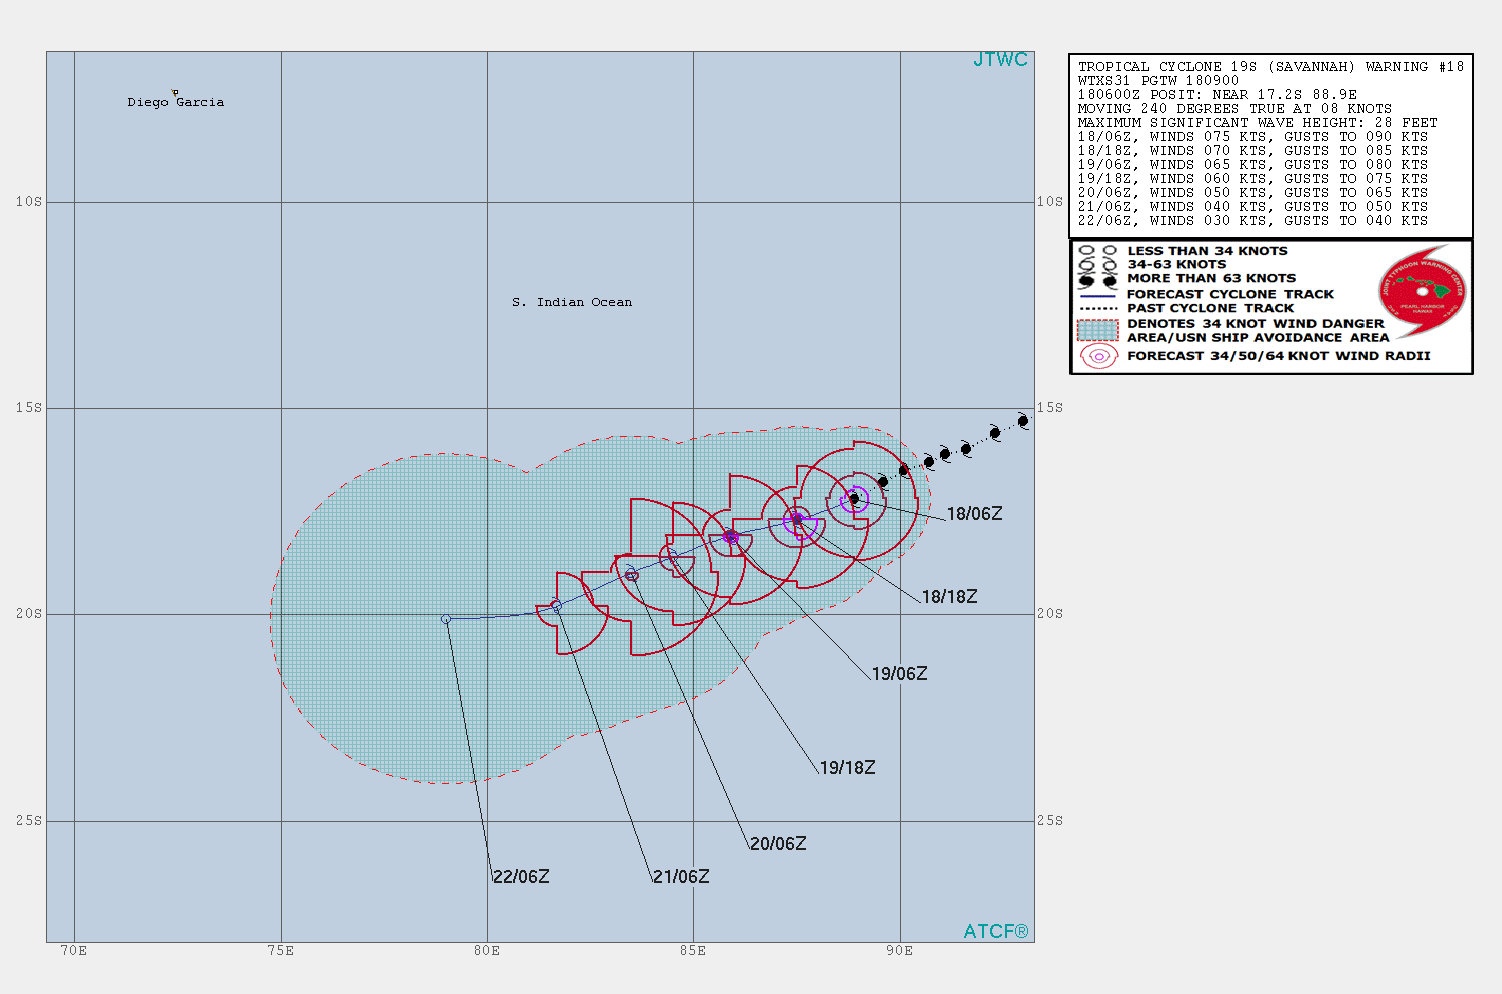 WARNING 18/JTWC